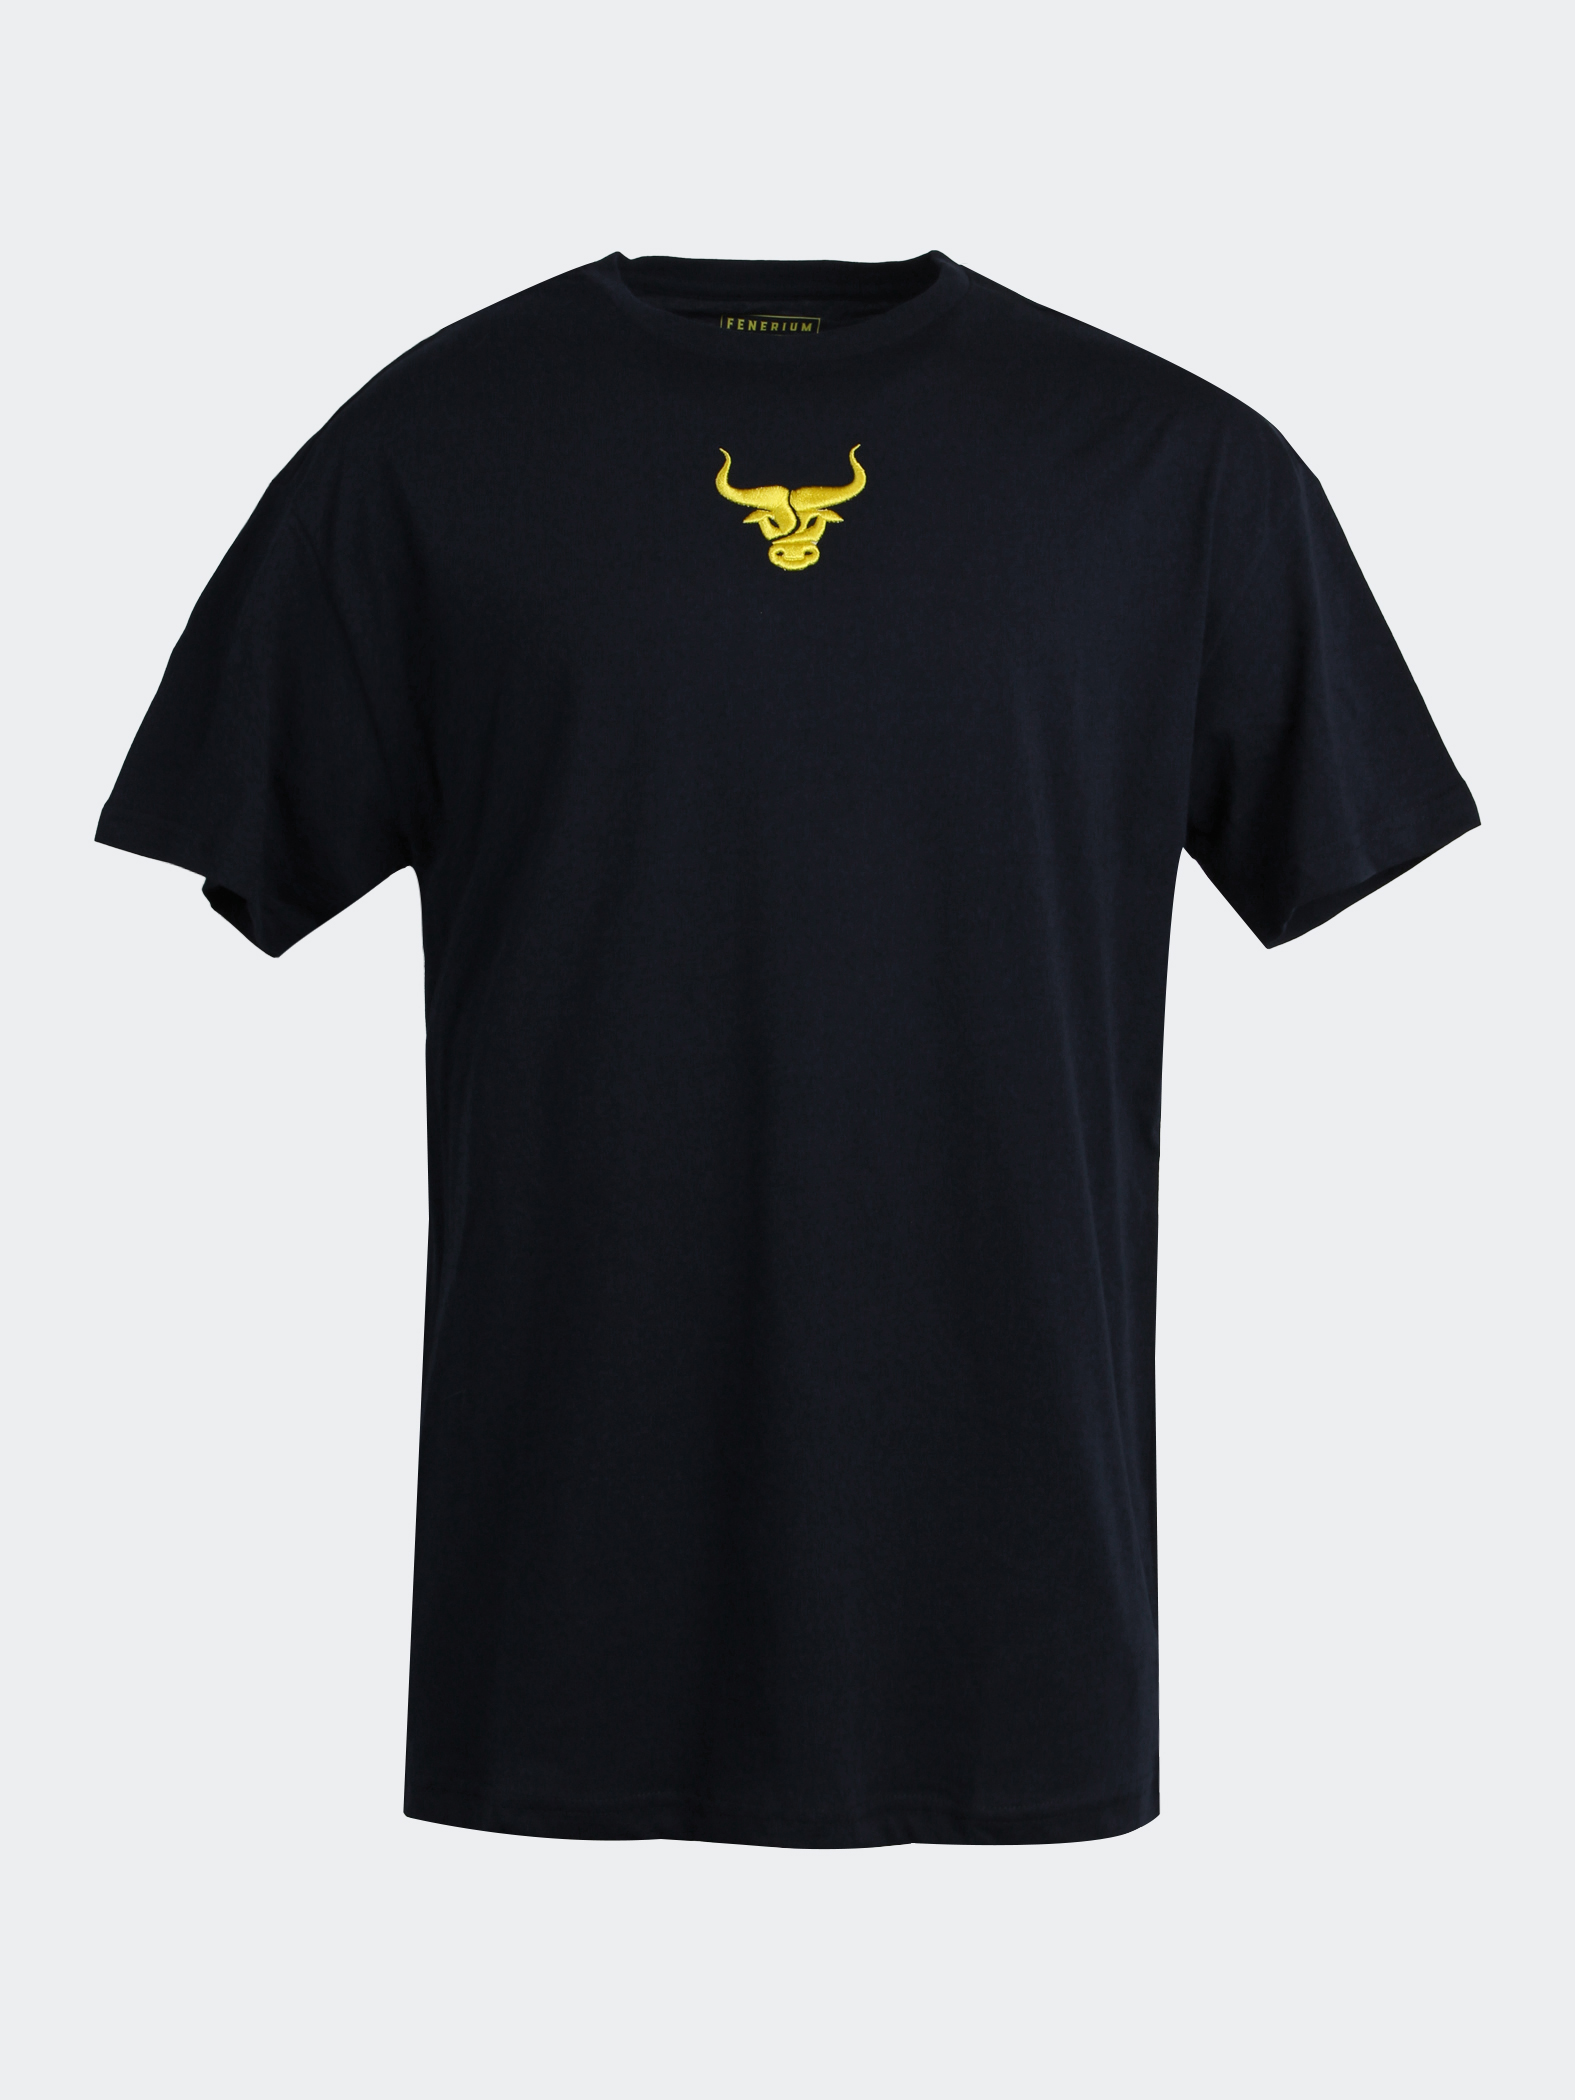 Men's Navy Blue Tribune Bull Embroidery Tshirt